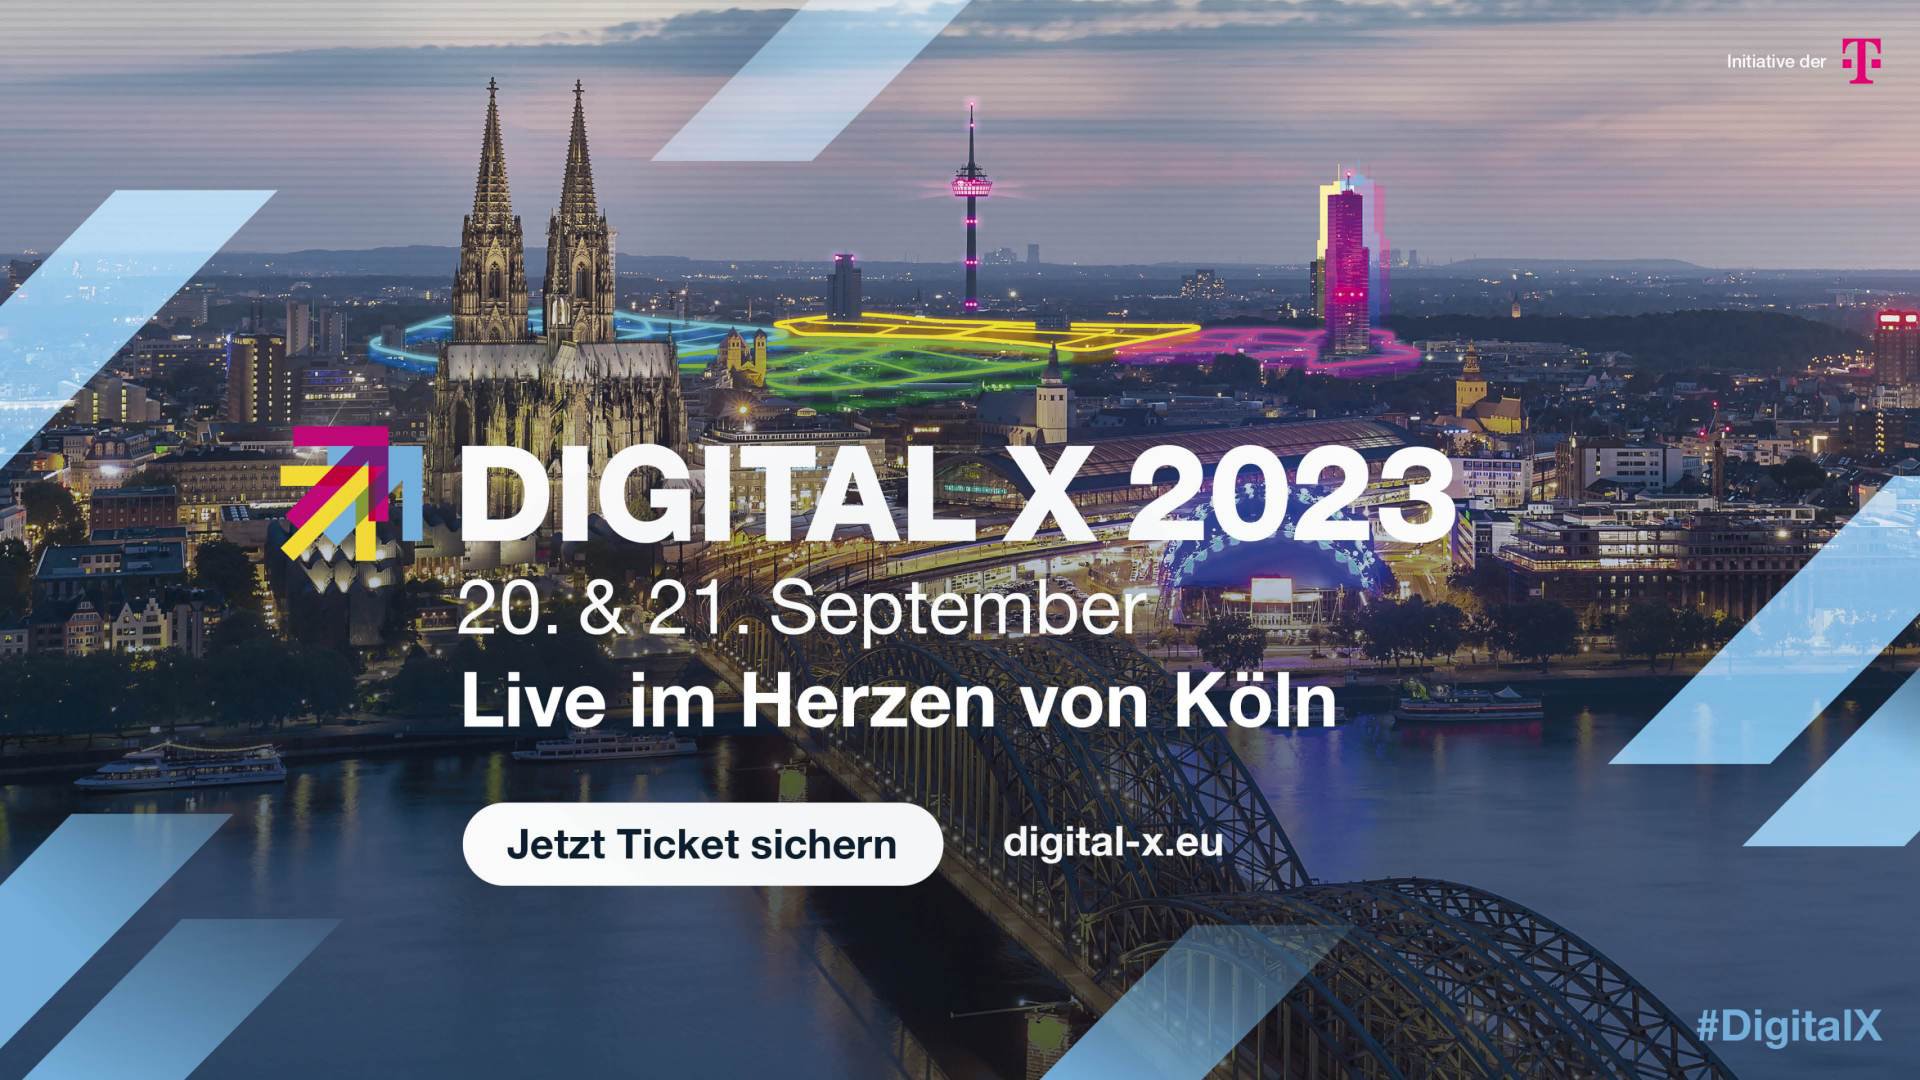 be digital - stay human on #digitalx 2023